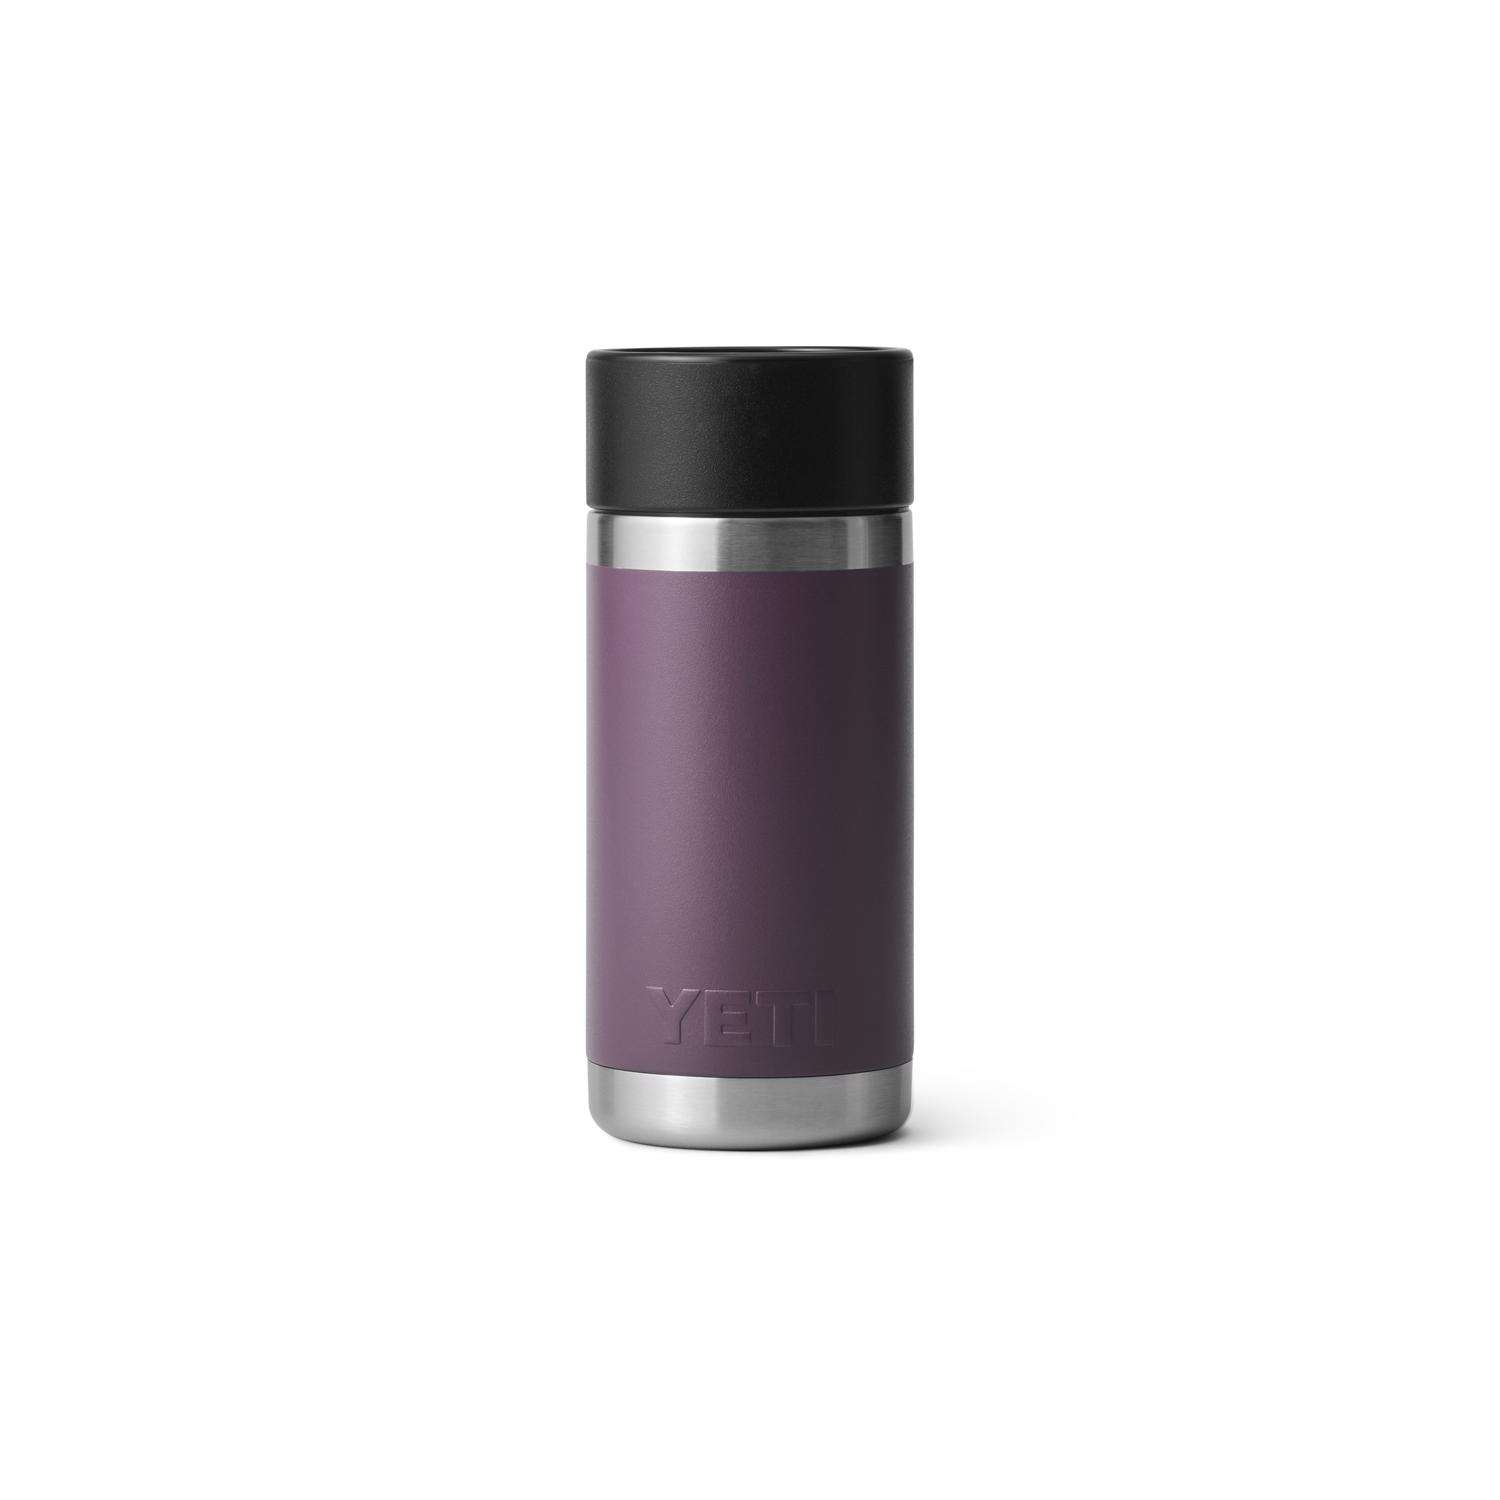 YETI Rambler 12 oz Colster Aquifer Blue BPA Free Can Insulator - Ace  Hardware